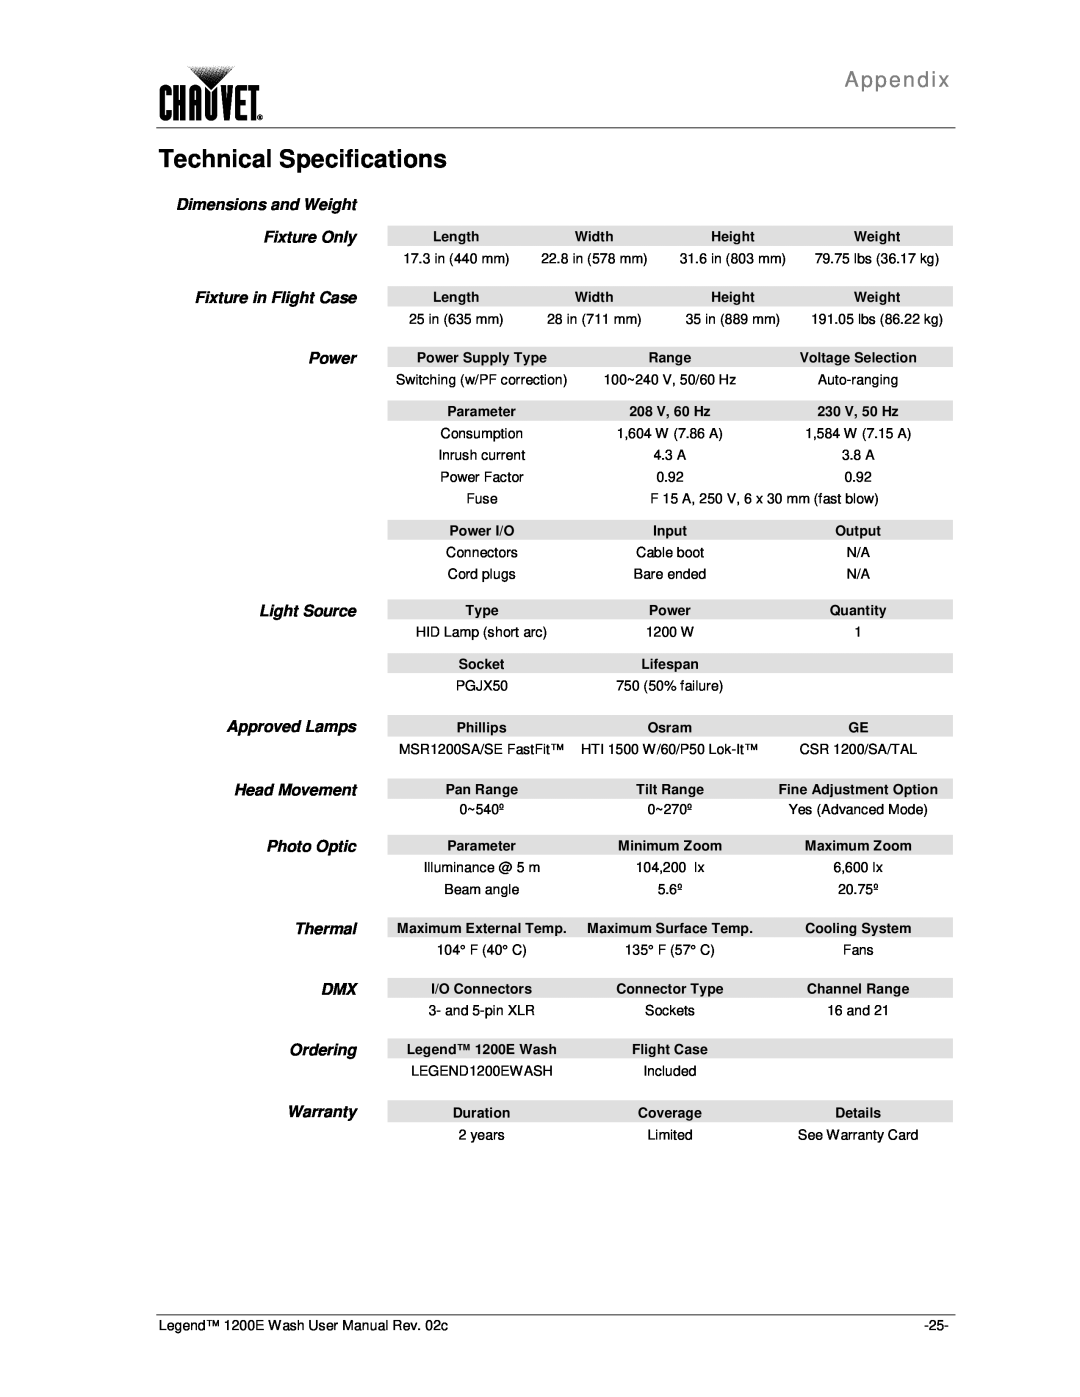 Chauvet 1200E user manual Technical Specifications, Appendix 